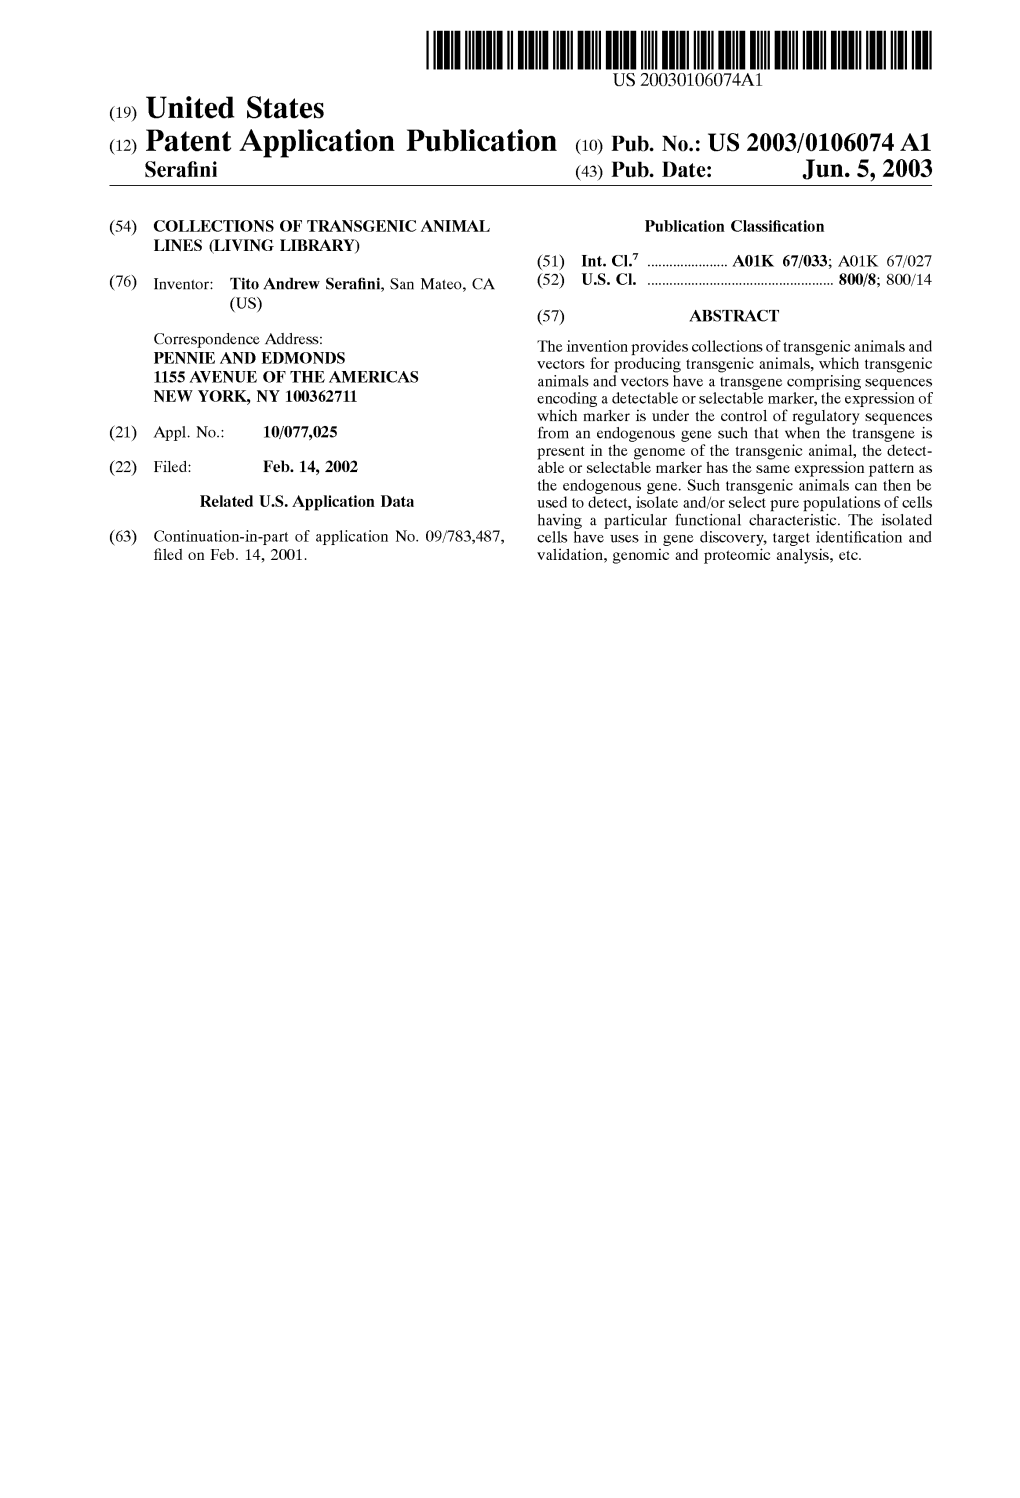 (12) Patent Application Publication (10) Pub. No.: US 2003/0106074 A1 Serafini (43) Pub